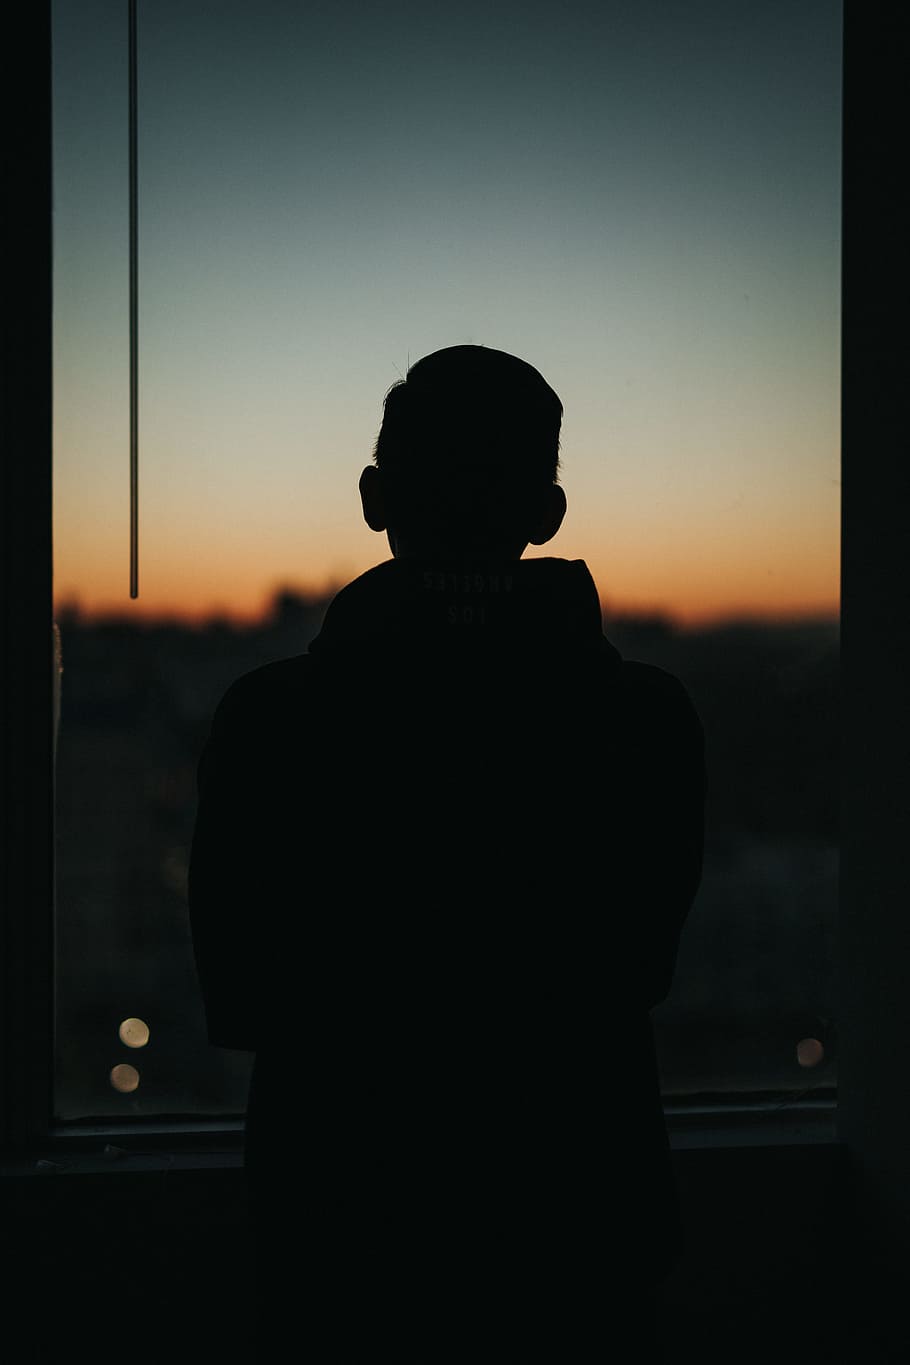 HD wallpaper: man standing front of glass window, shadow